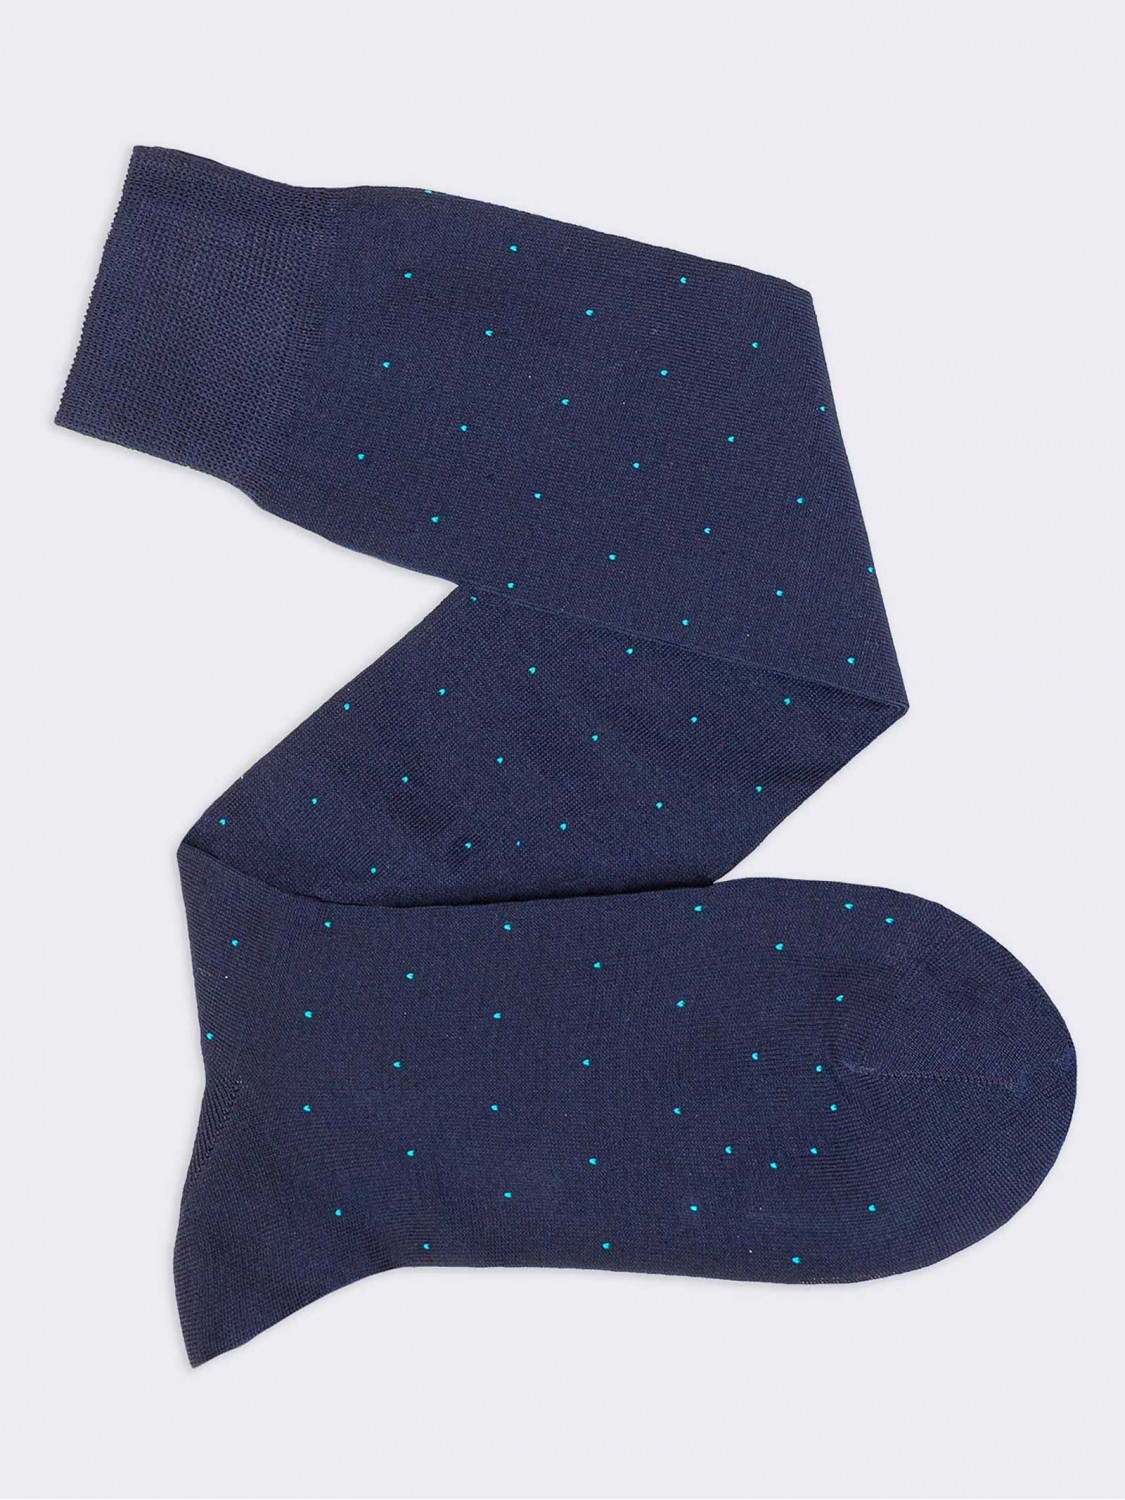 Pin points pattern Men's Knee High Socks